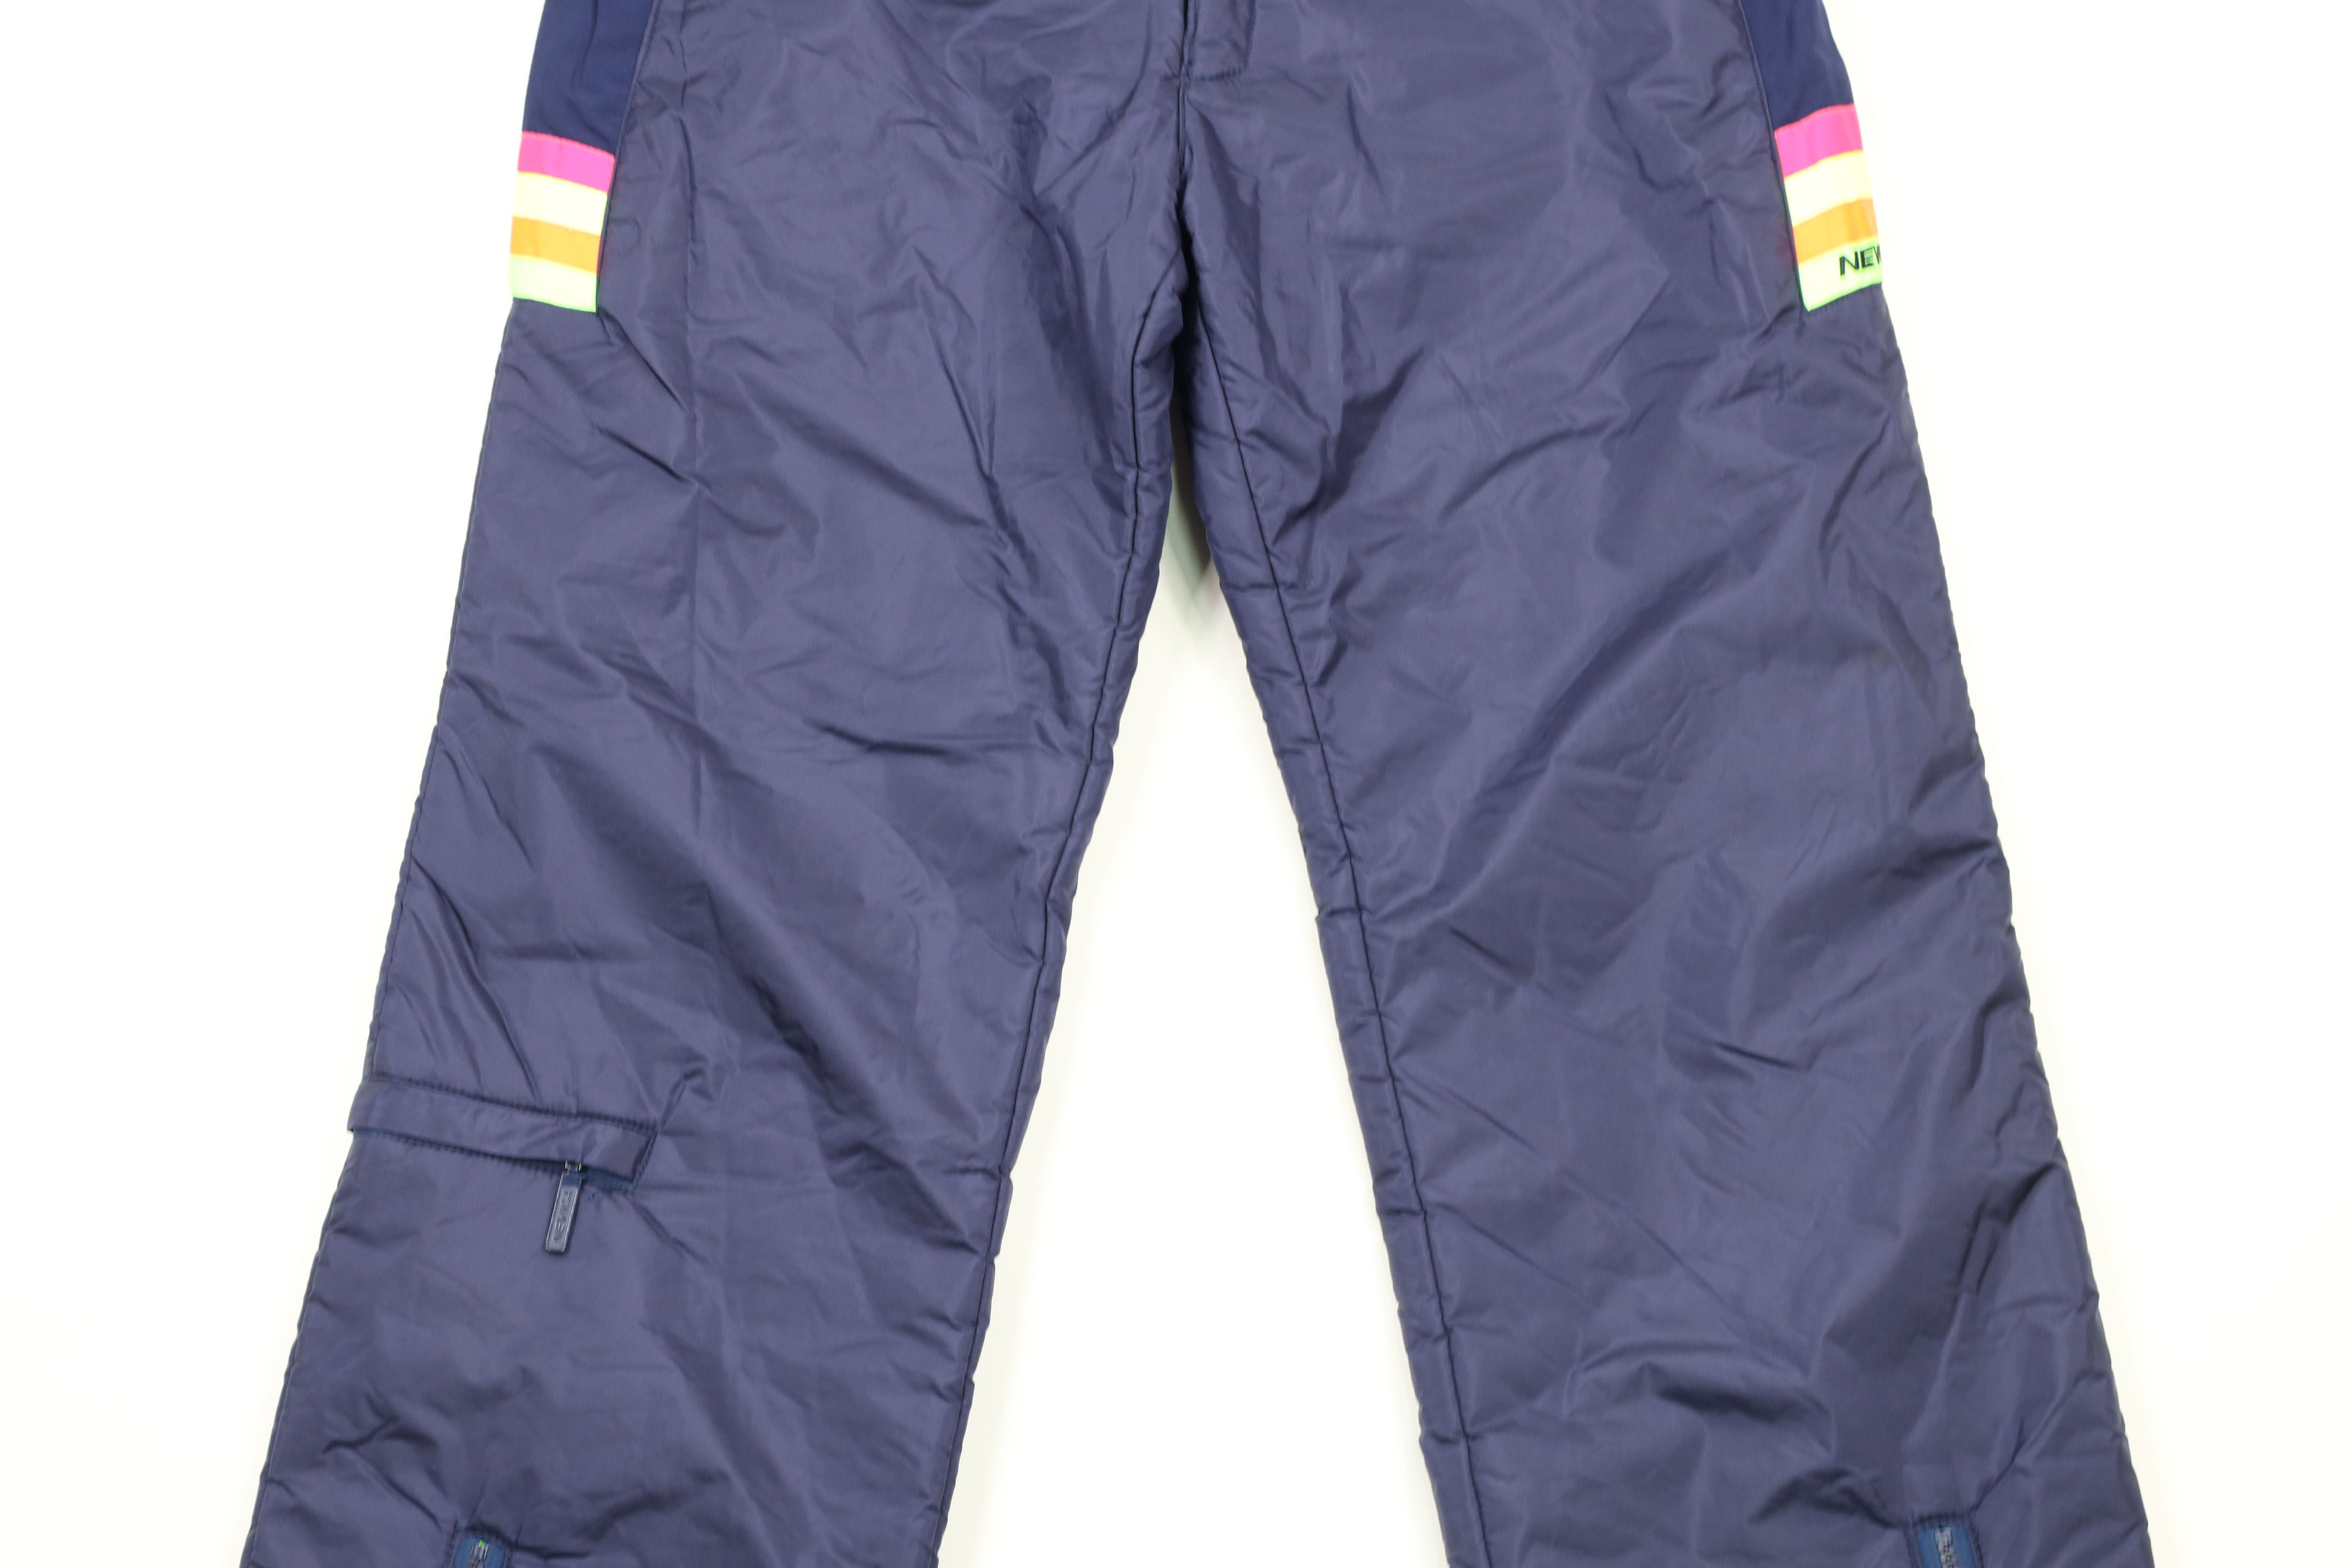 Vintage Vintage 90s Streetwear Cuffed Winter Snow Pants Navy Blue Size US 30 / EU 46 - 3 Thumbnail